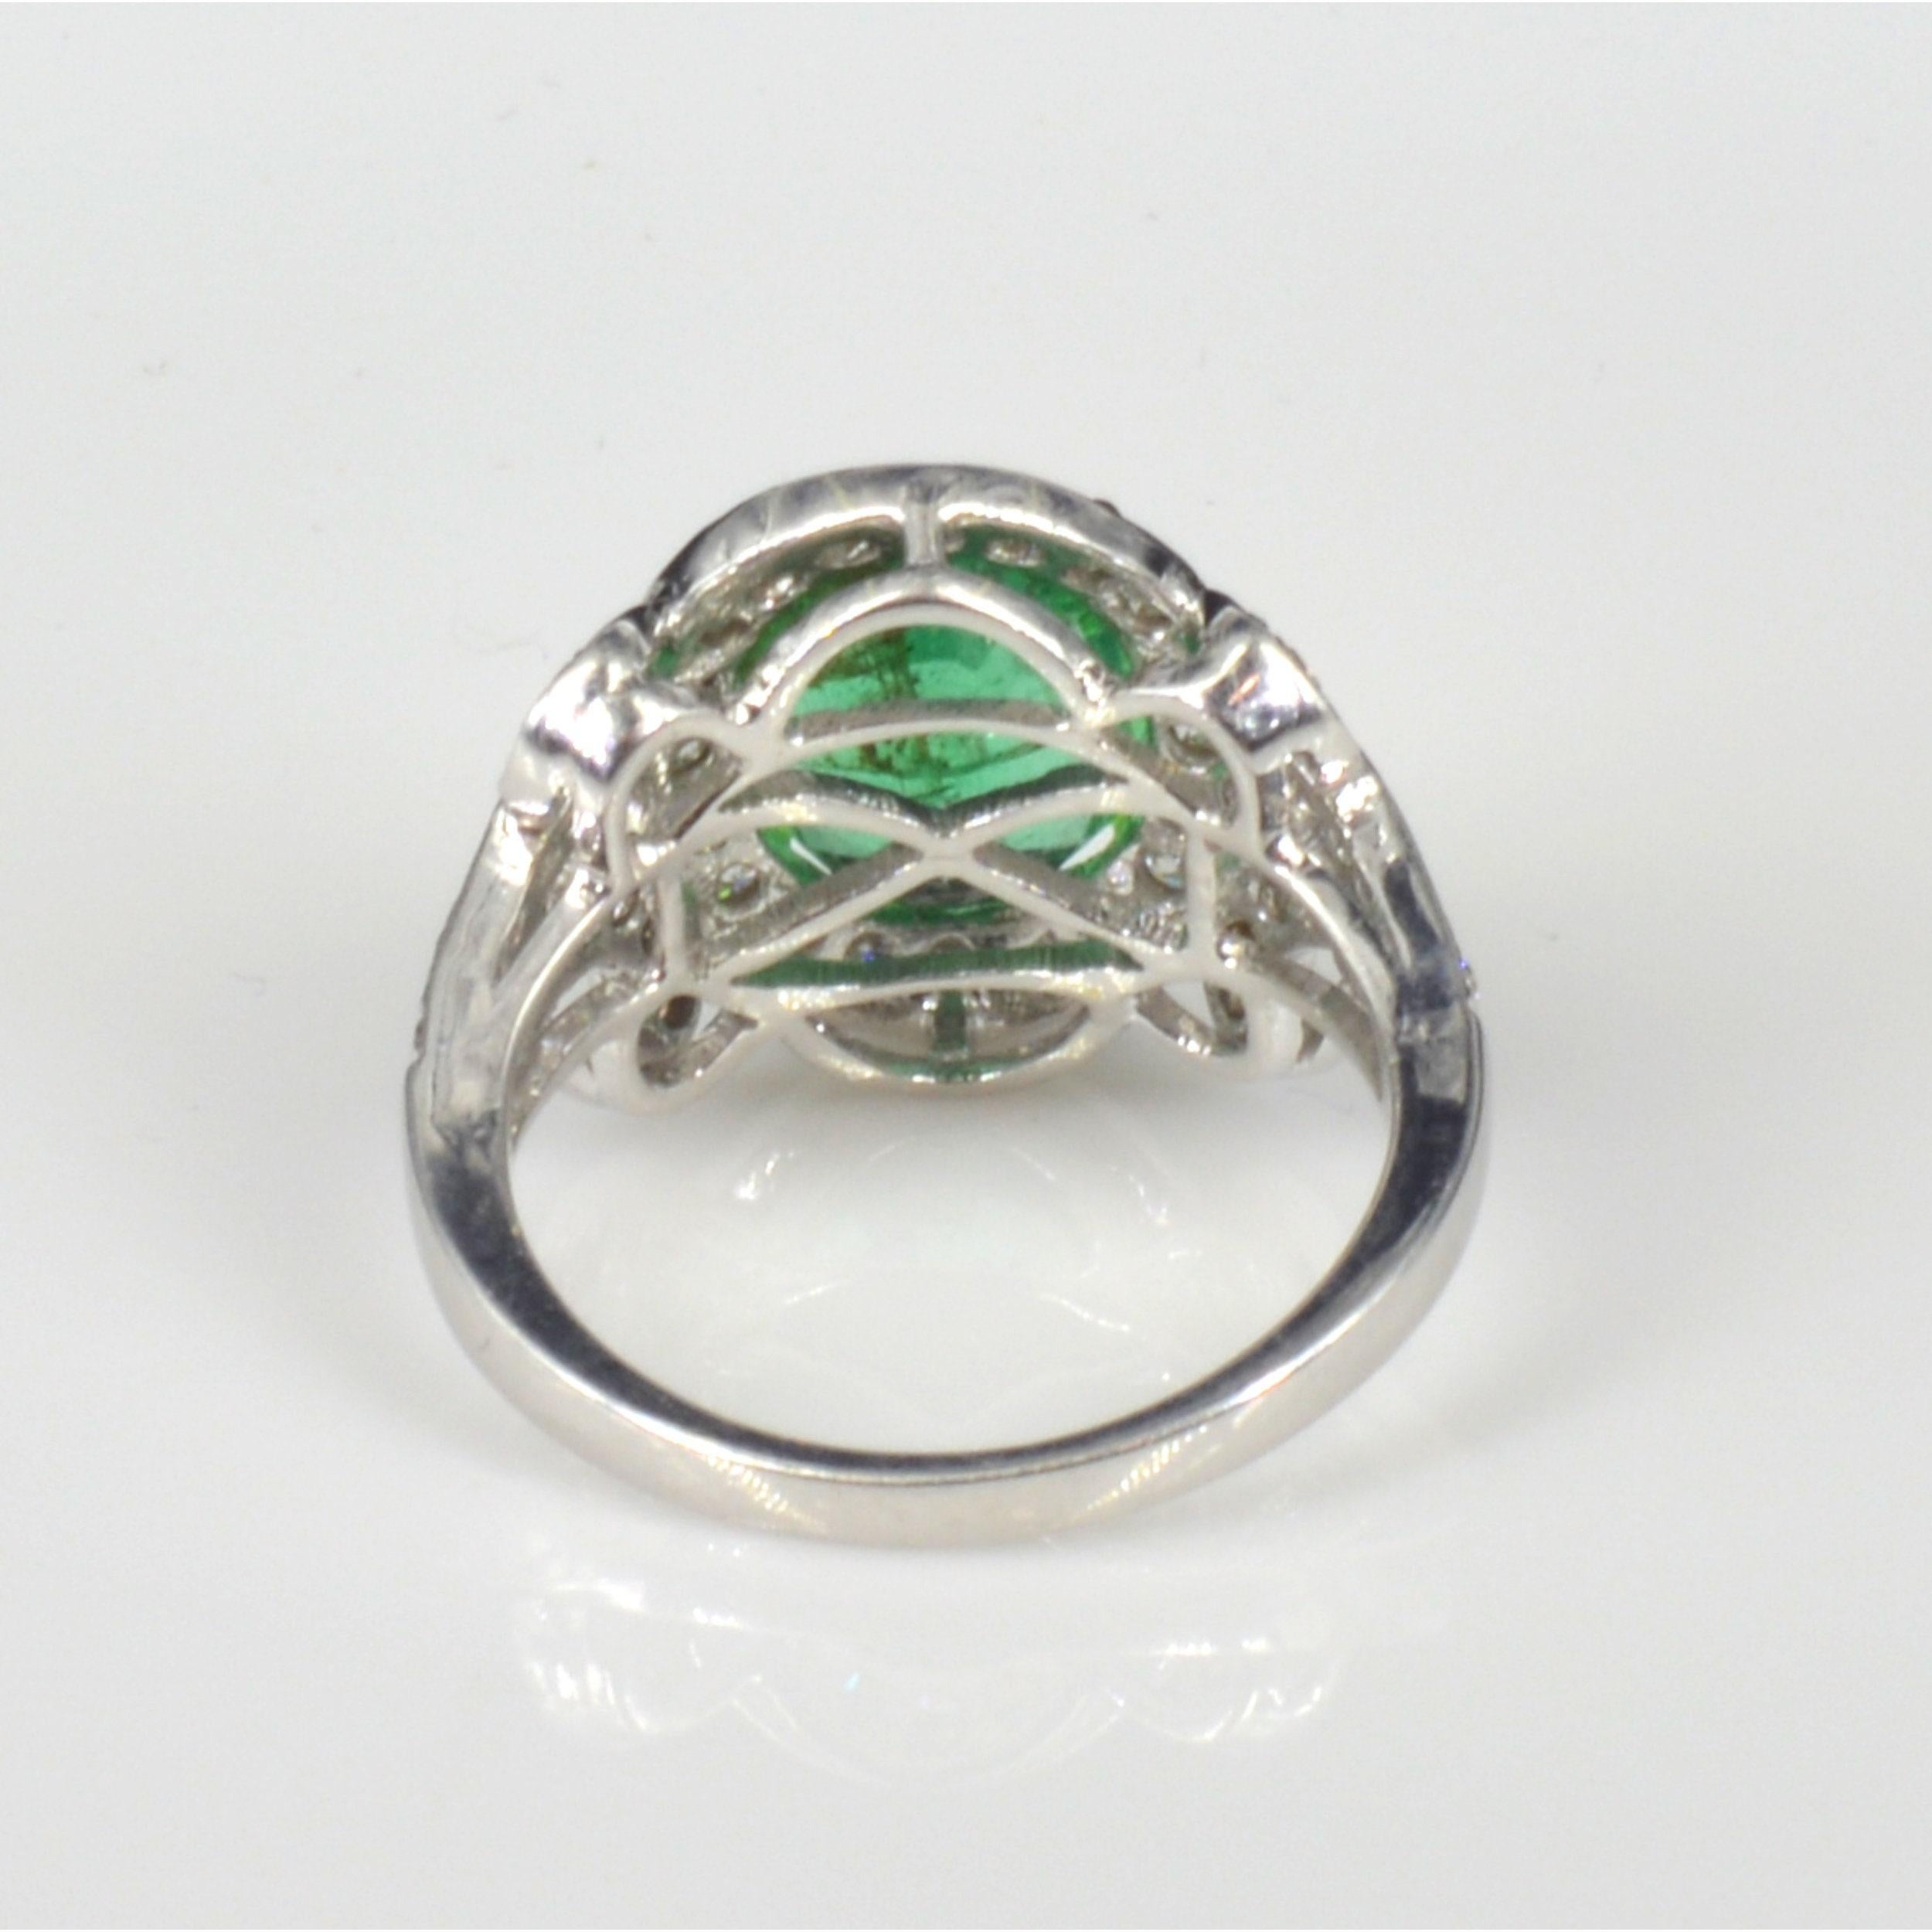 For Sale:  Antique 3 Carat Emerald Diamond Engagement Ring, Art Deco Diamond Wedding Ring 2